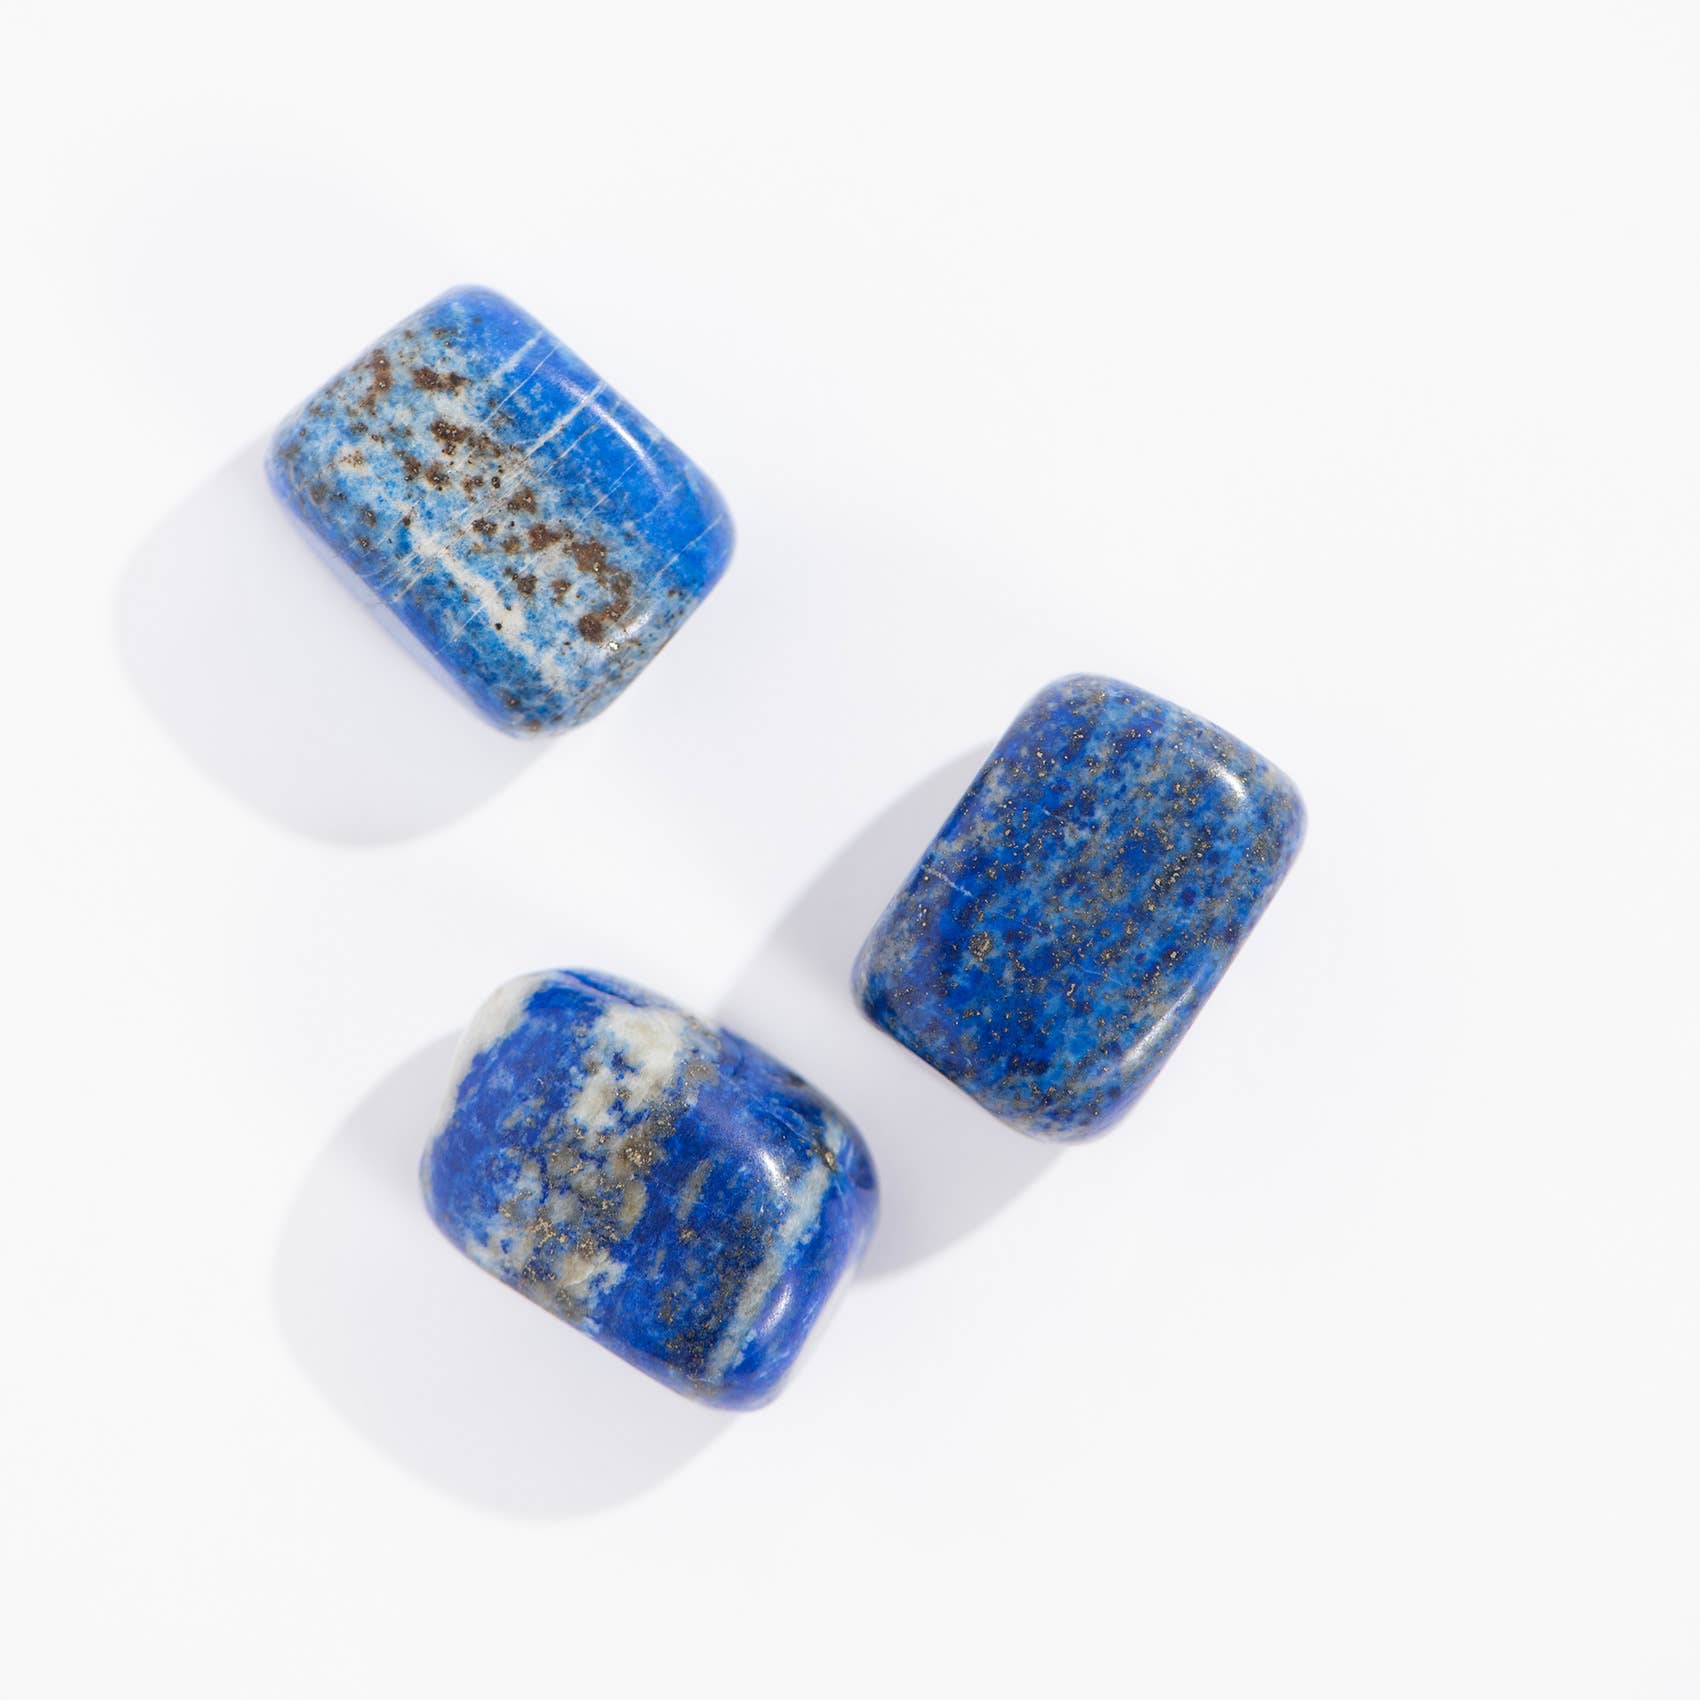 CRYSTALS - Tumbled Lapis Lazuli